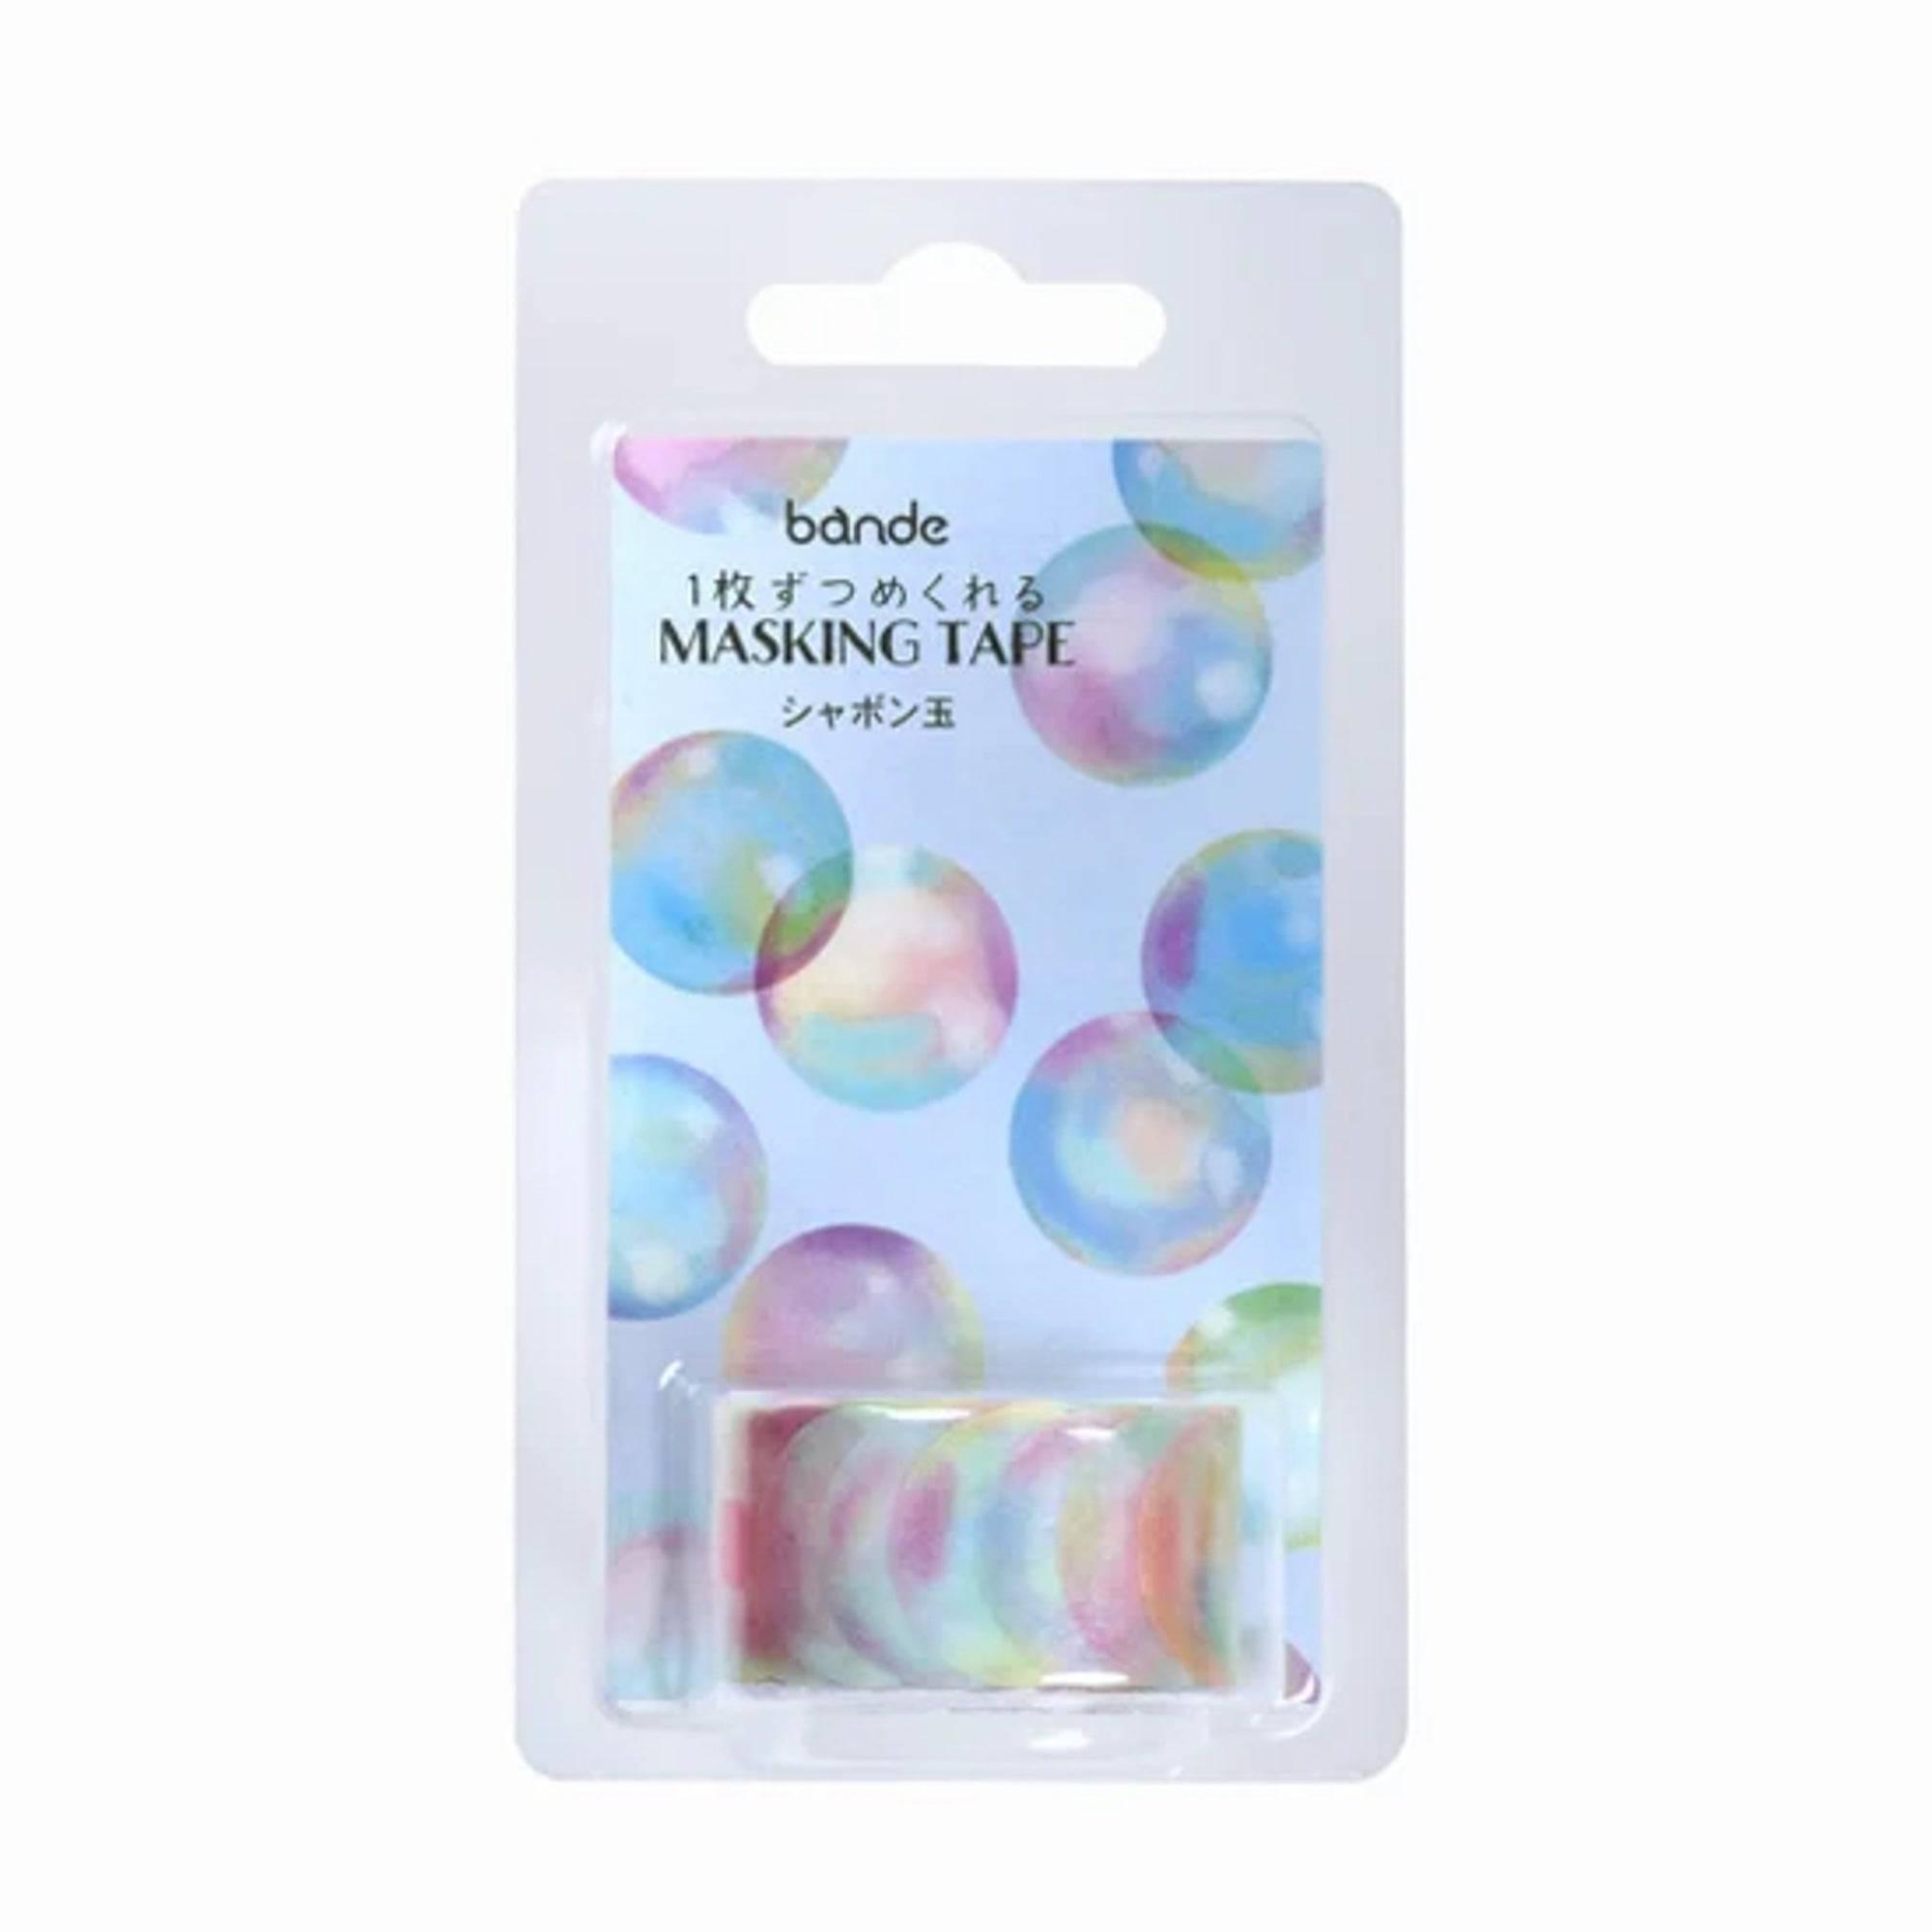 Soap Bubble Washi Tape Sticker Roll - Bande - Komorebi Stationery